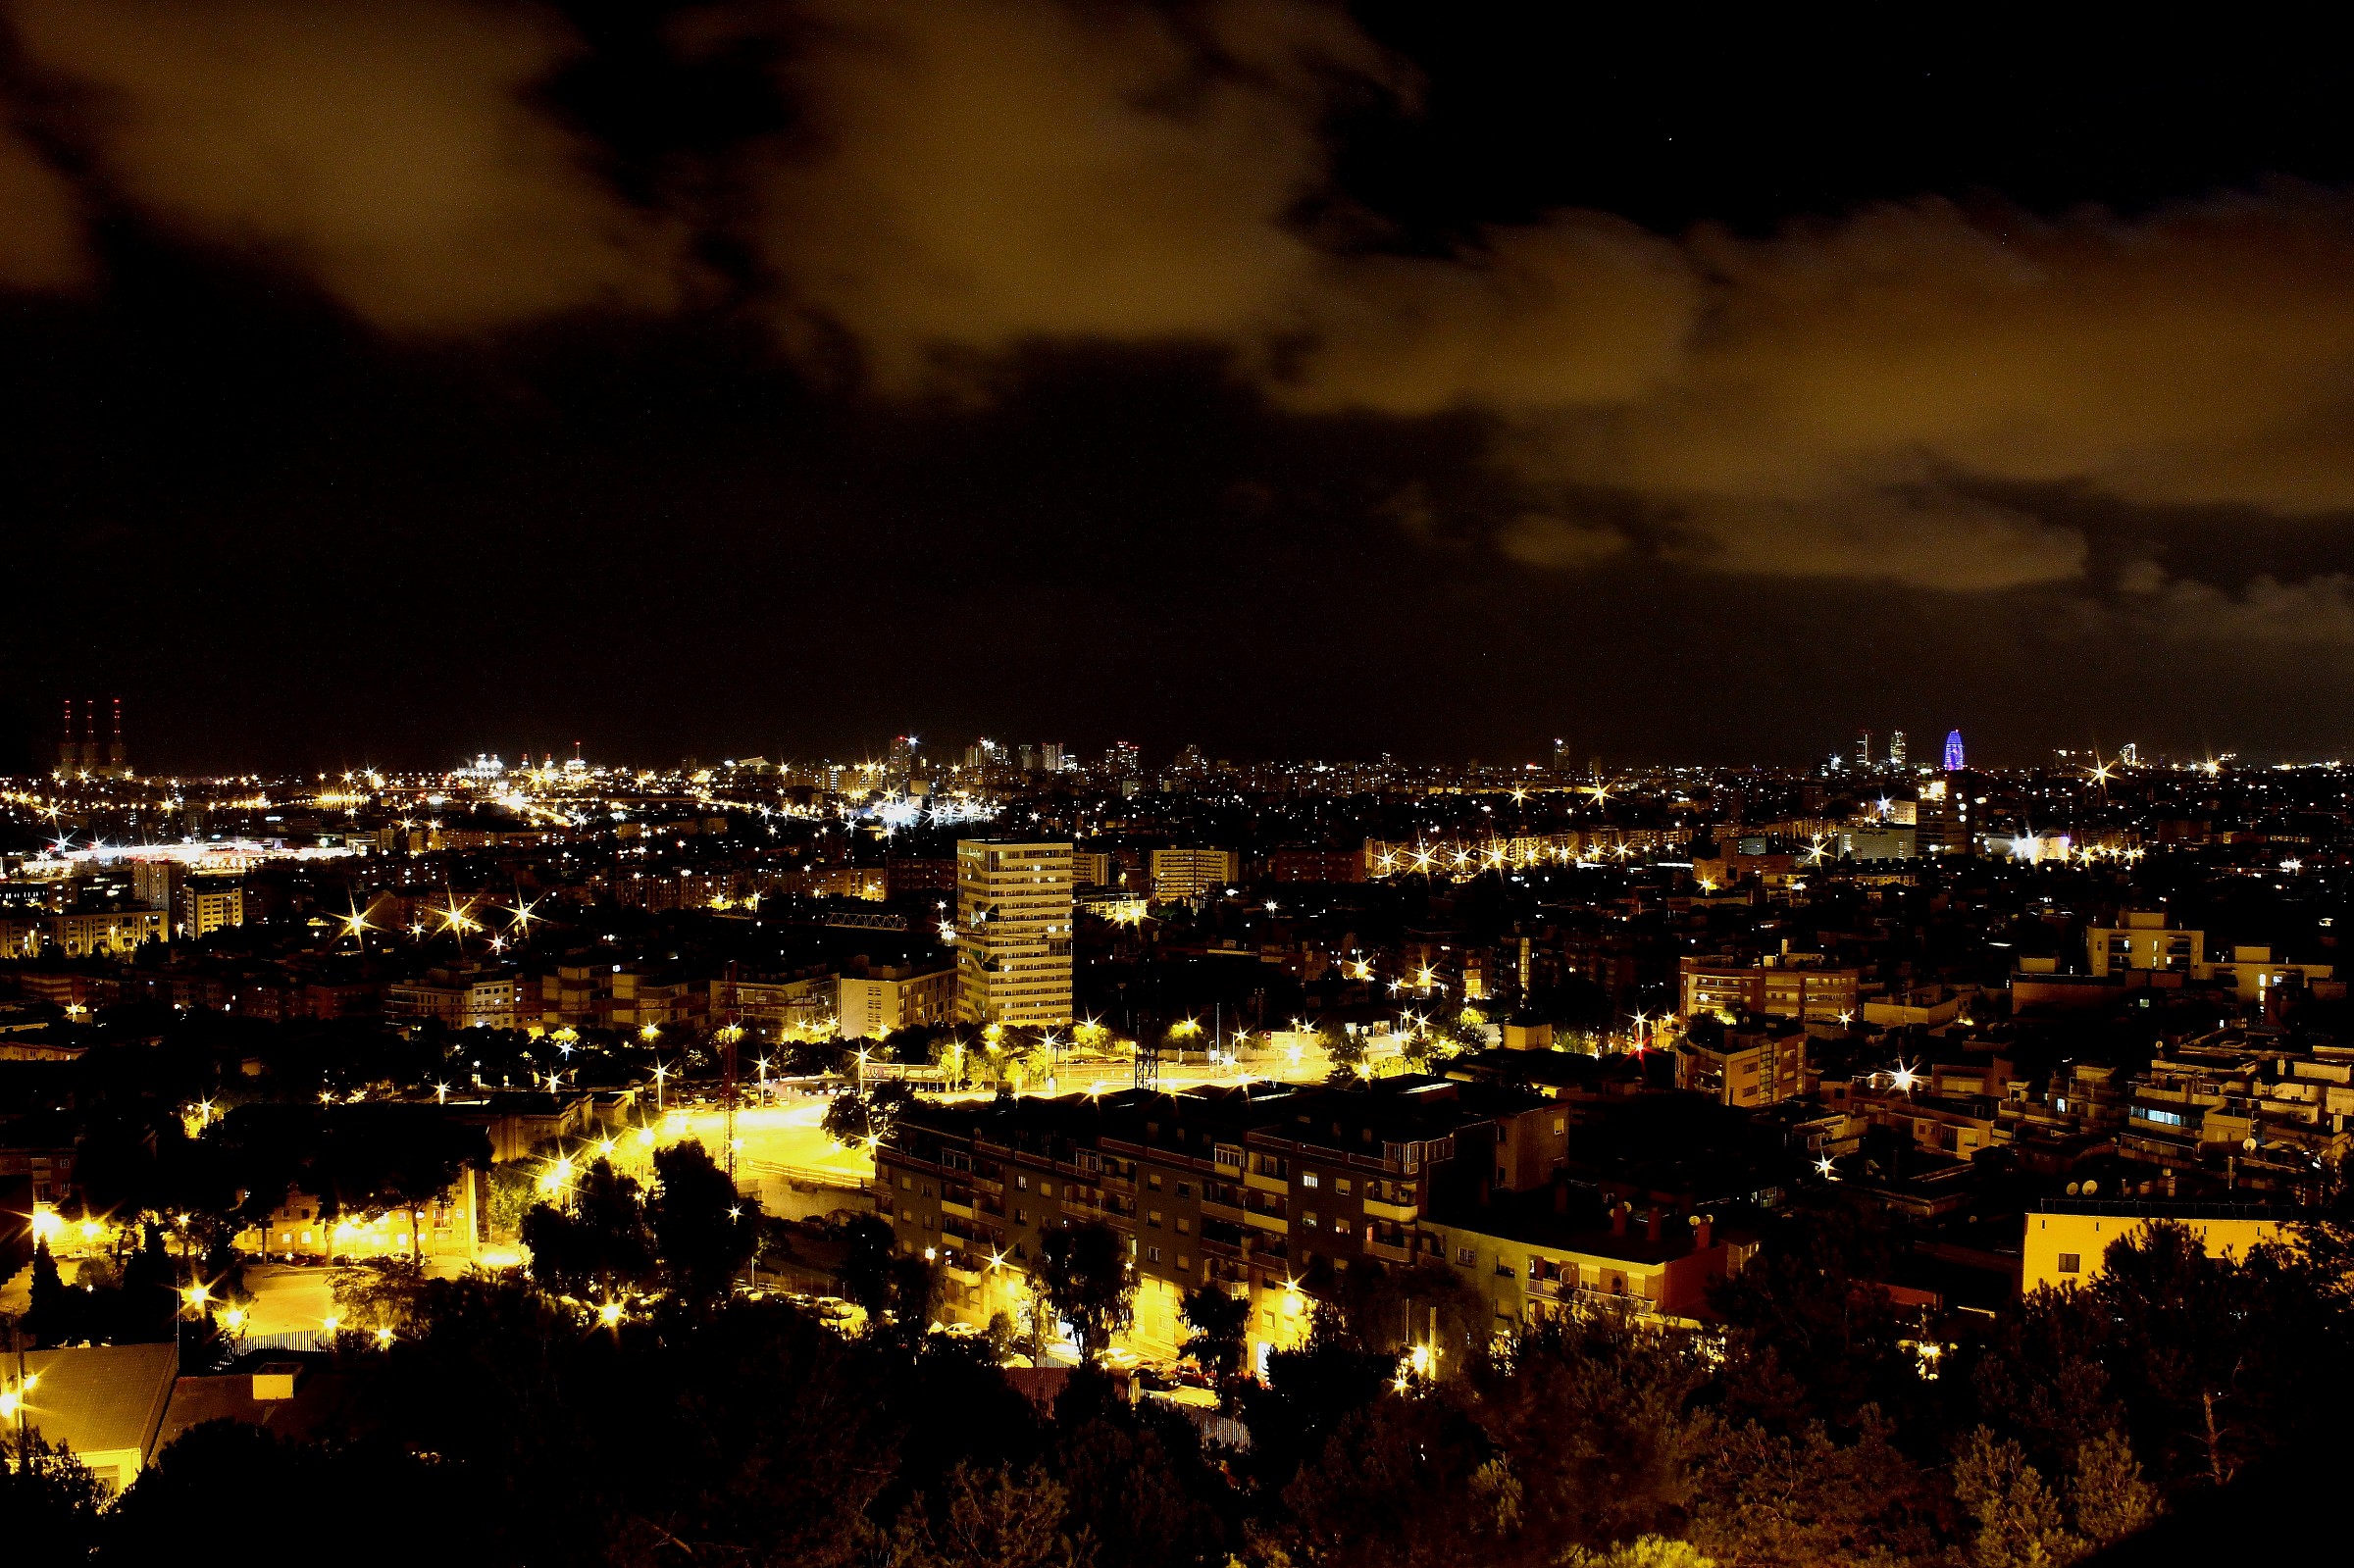 Barcelona at night...